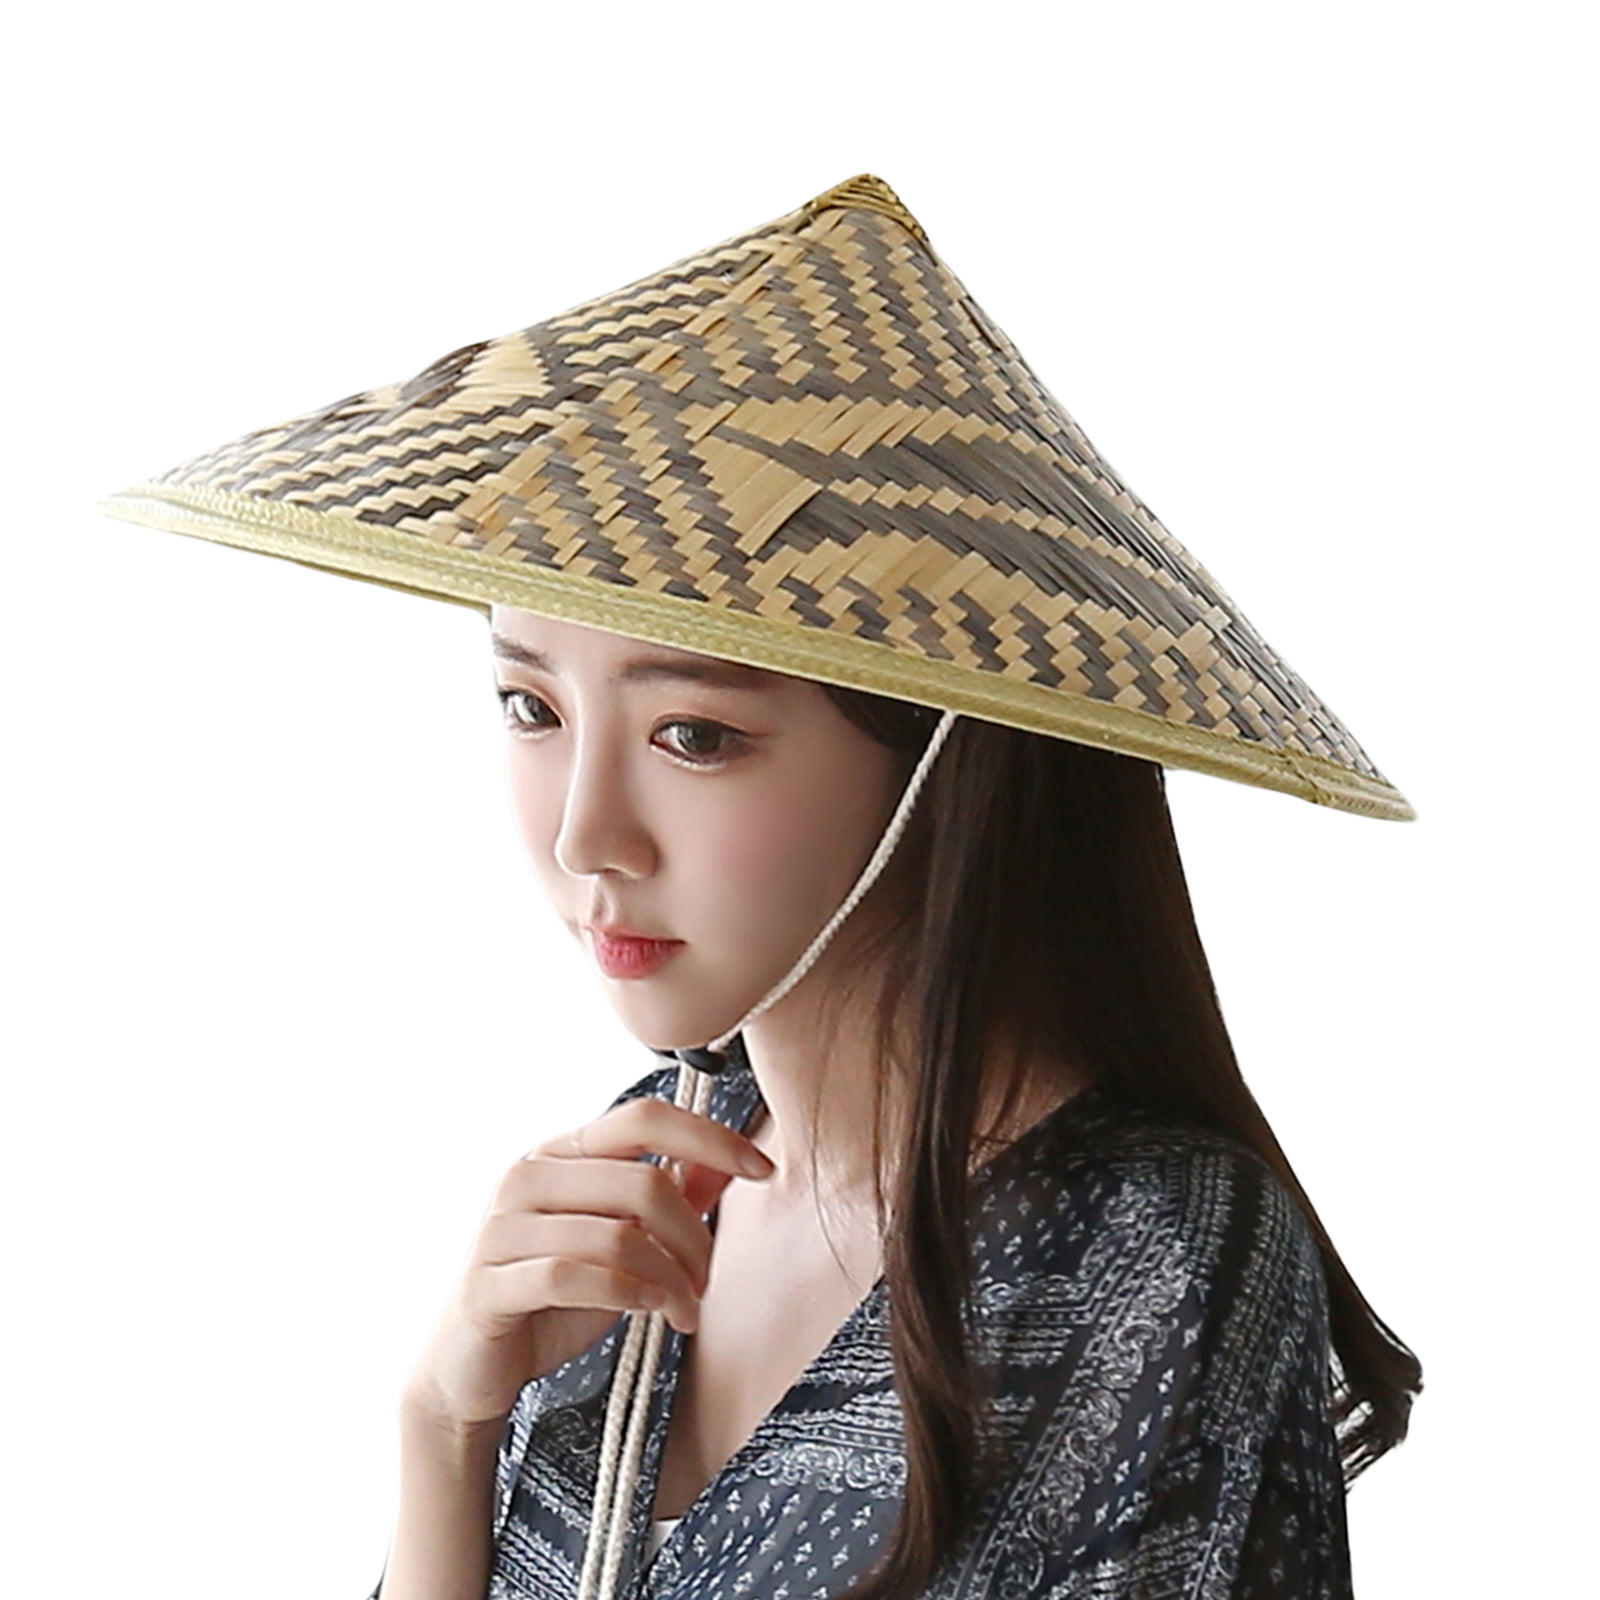 Bamboo hat. Бамбуковая шляпа. Шляпа из бамбука. Бамбуковая шляпа с вуалью. Японская шляпа weimao.